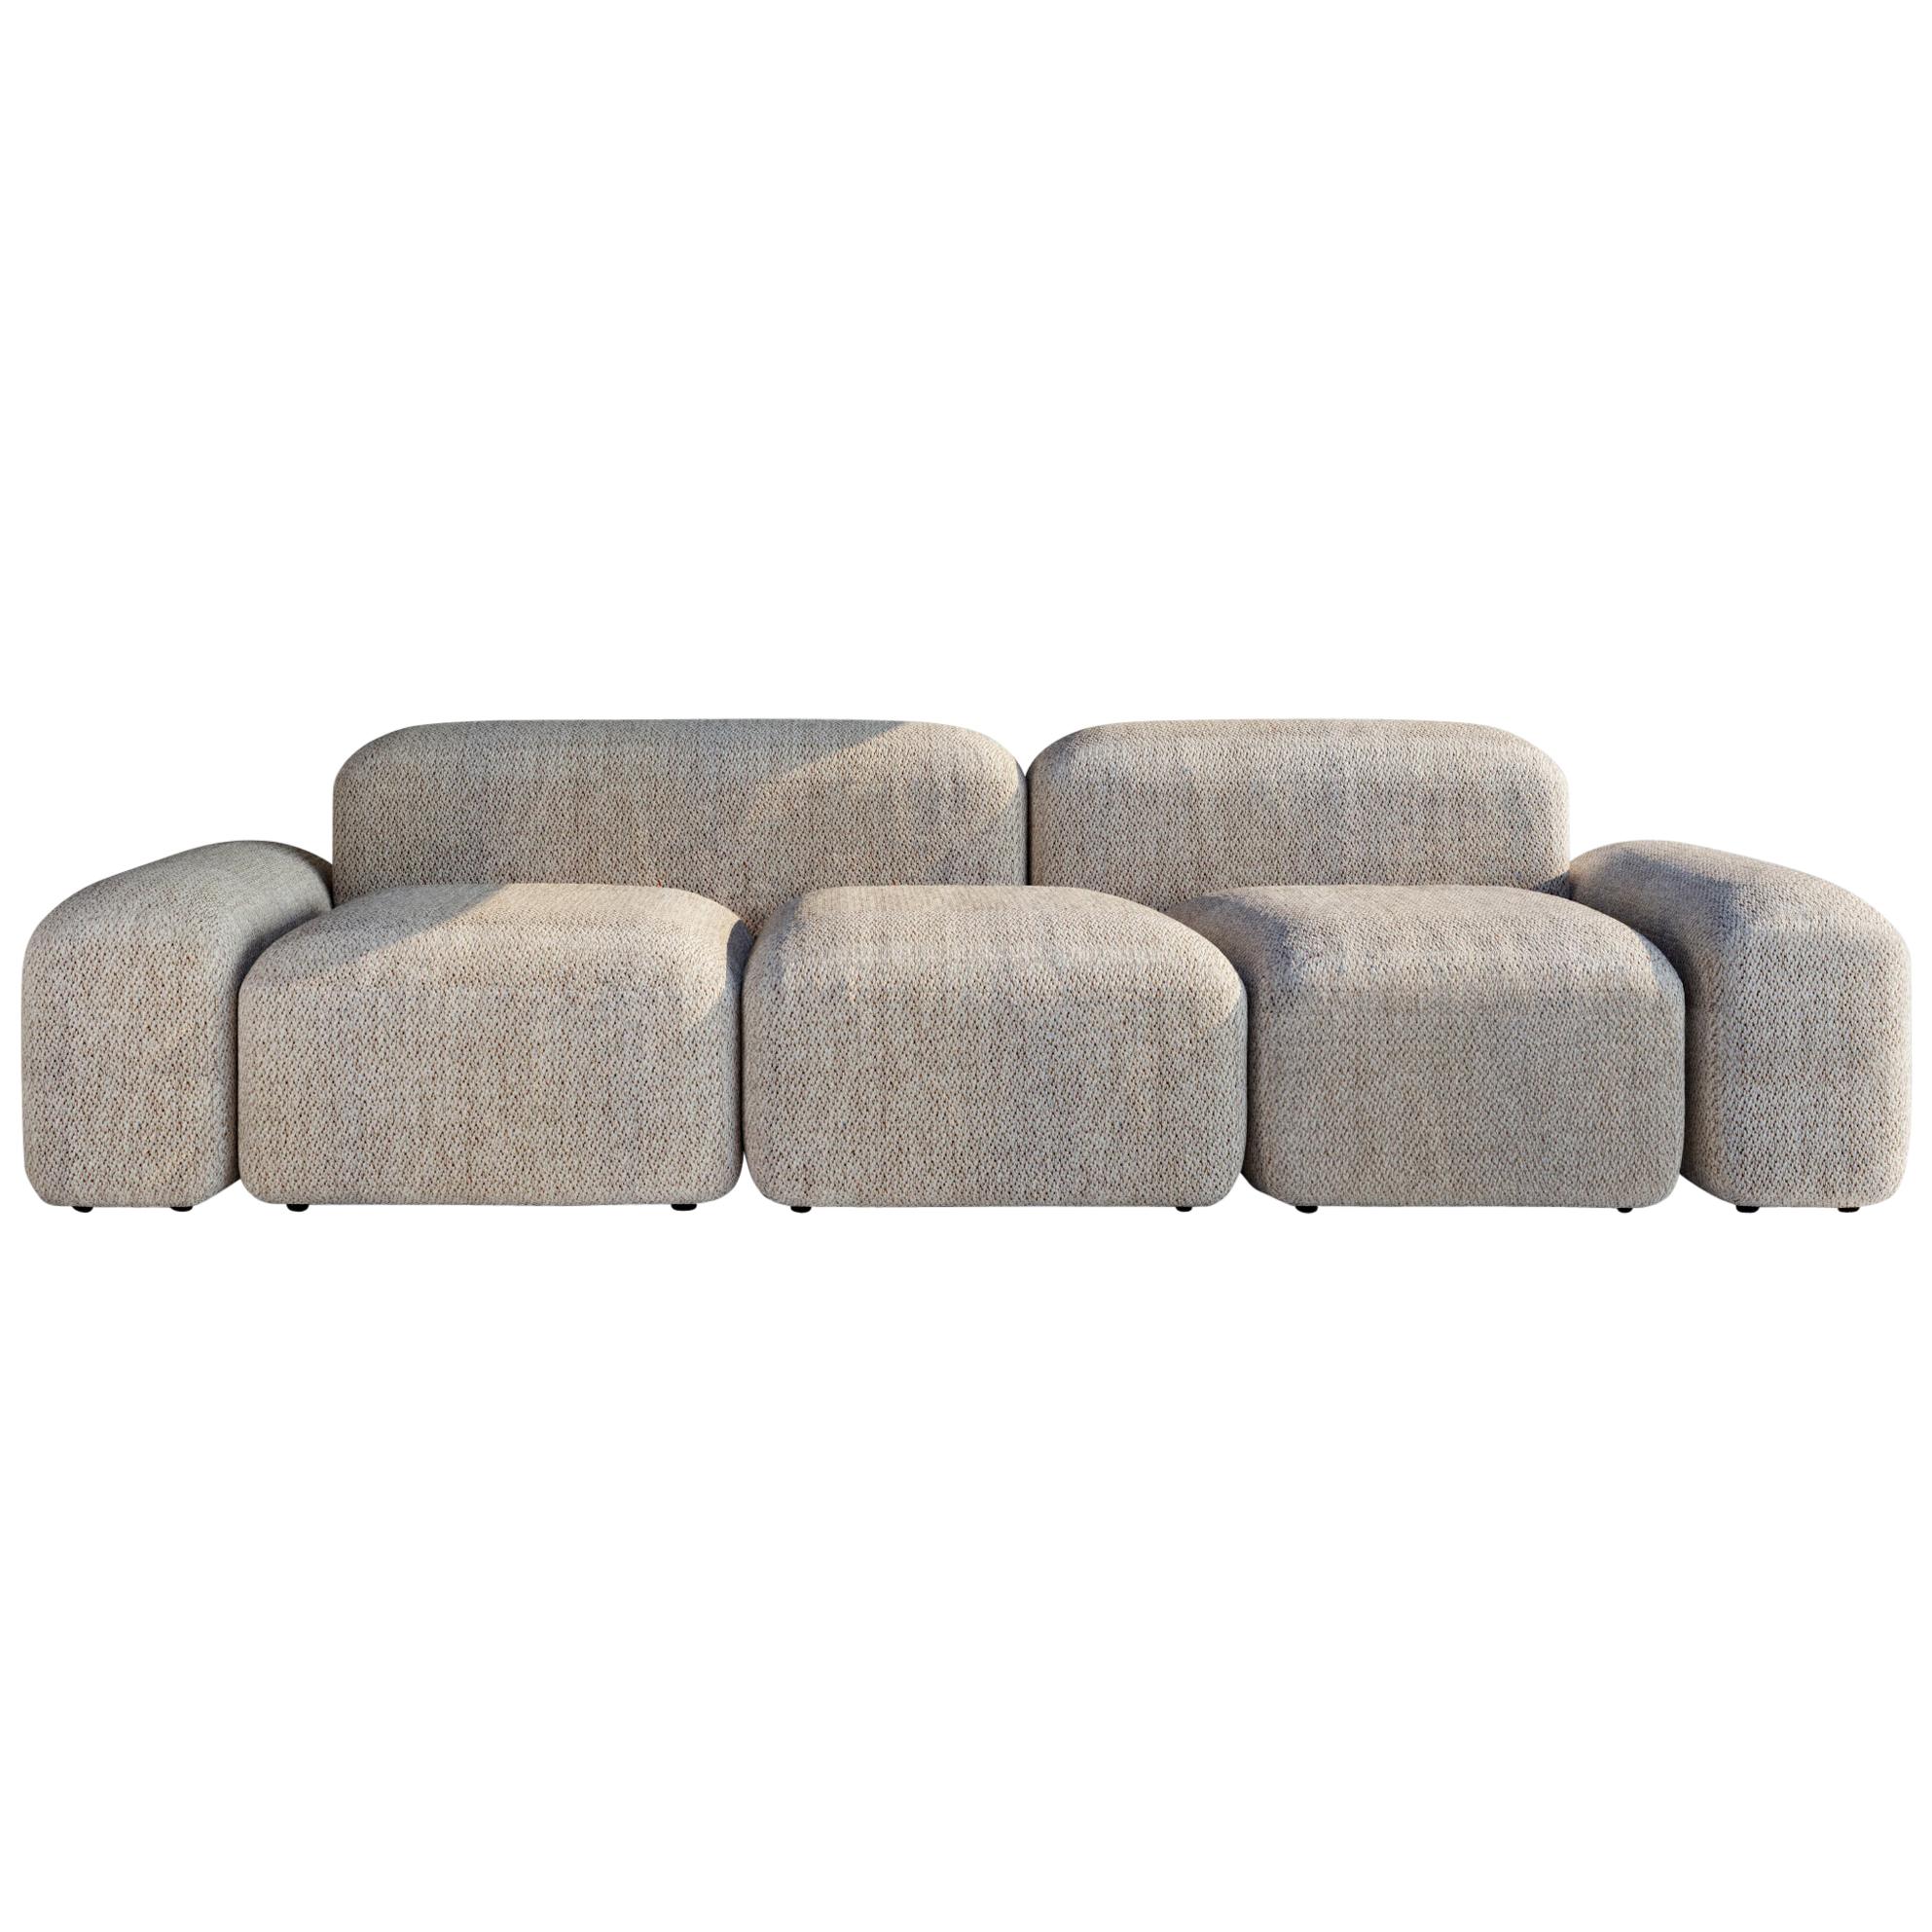 Modular and Customizable Sofa 'Lapis' 060 'Many Layouts and Fabrics Available'